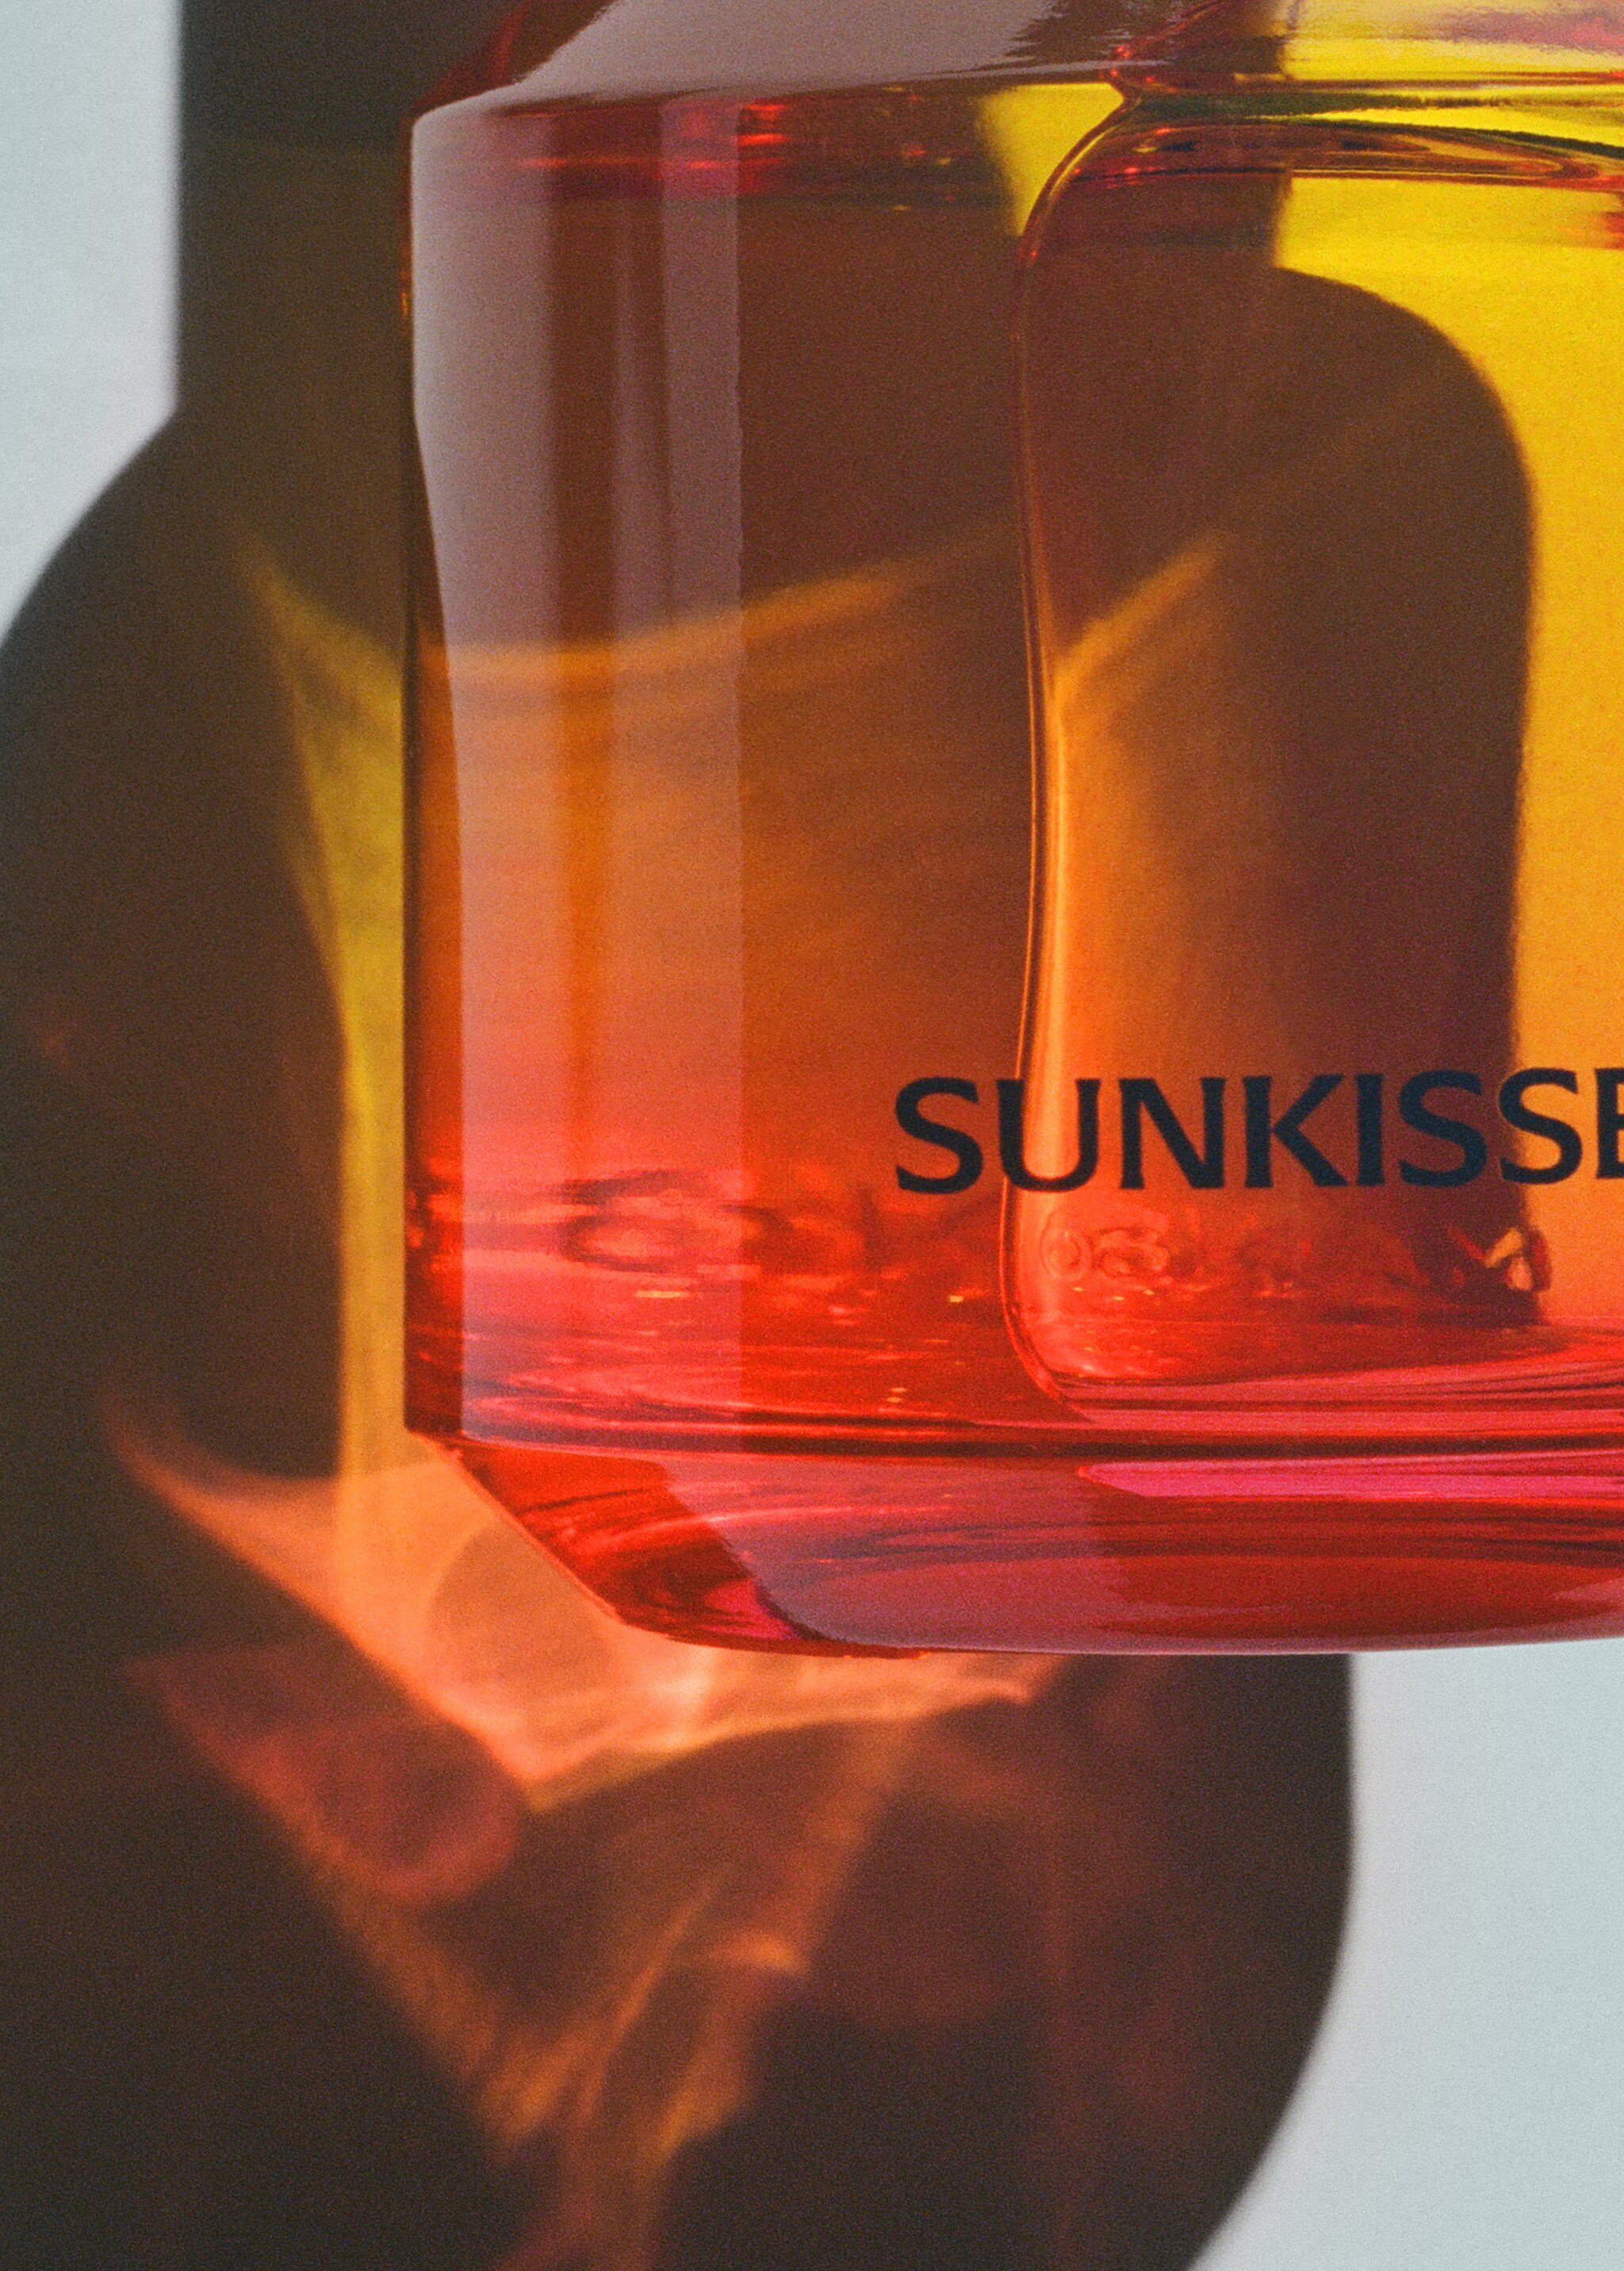 Sunkissed Fragrance 100ml - Деталь изделия 2